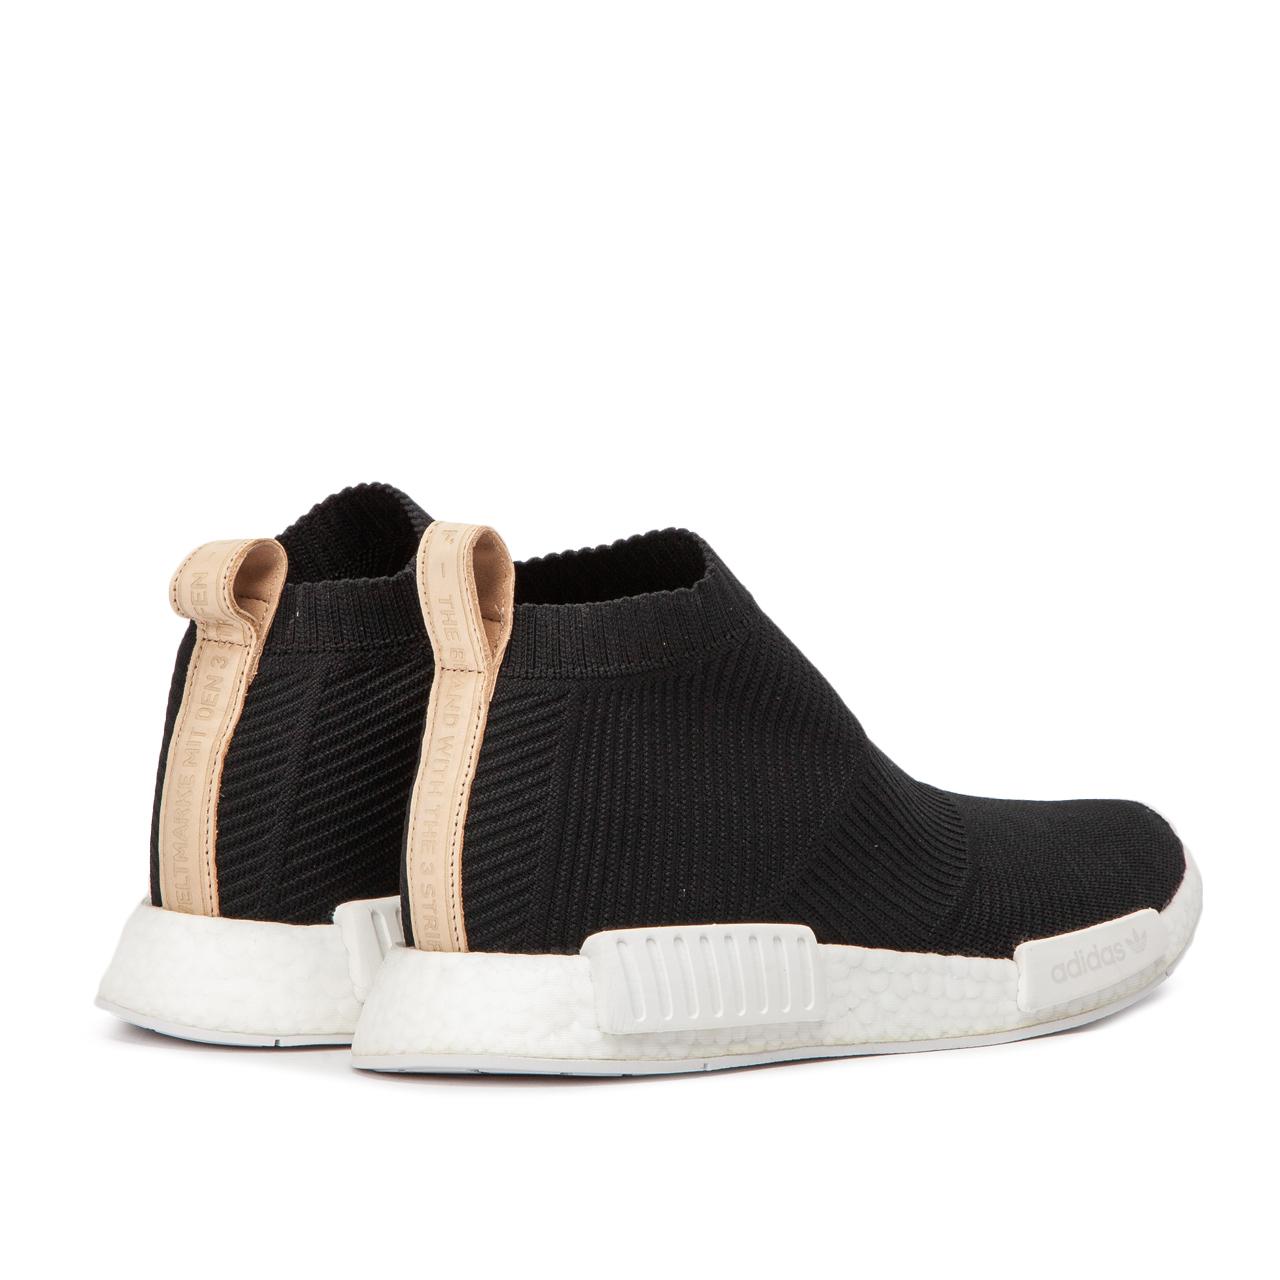 adidas Leather Nmd Cs1 City Sock Primeknit in Black for Men - Lyst